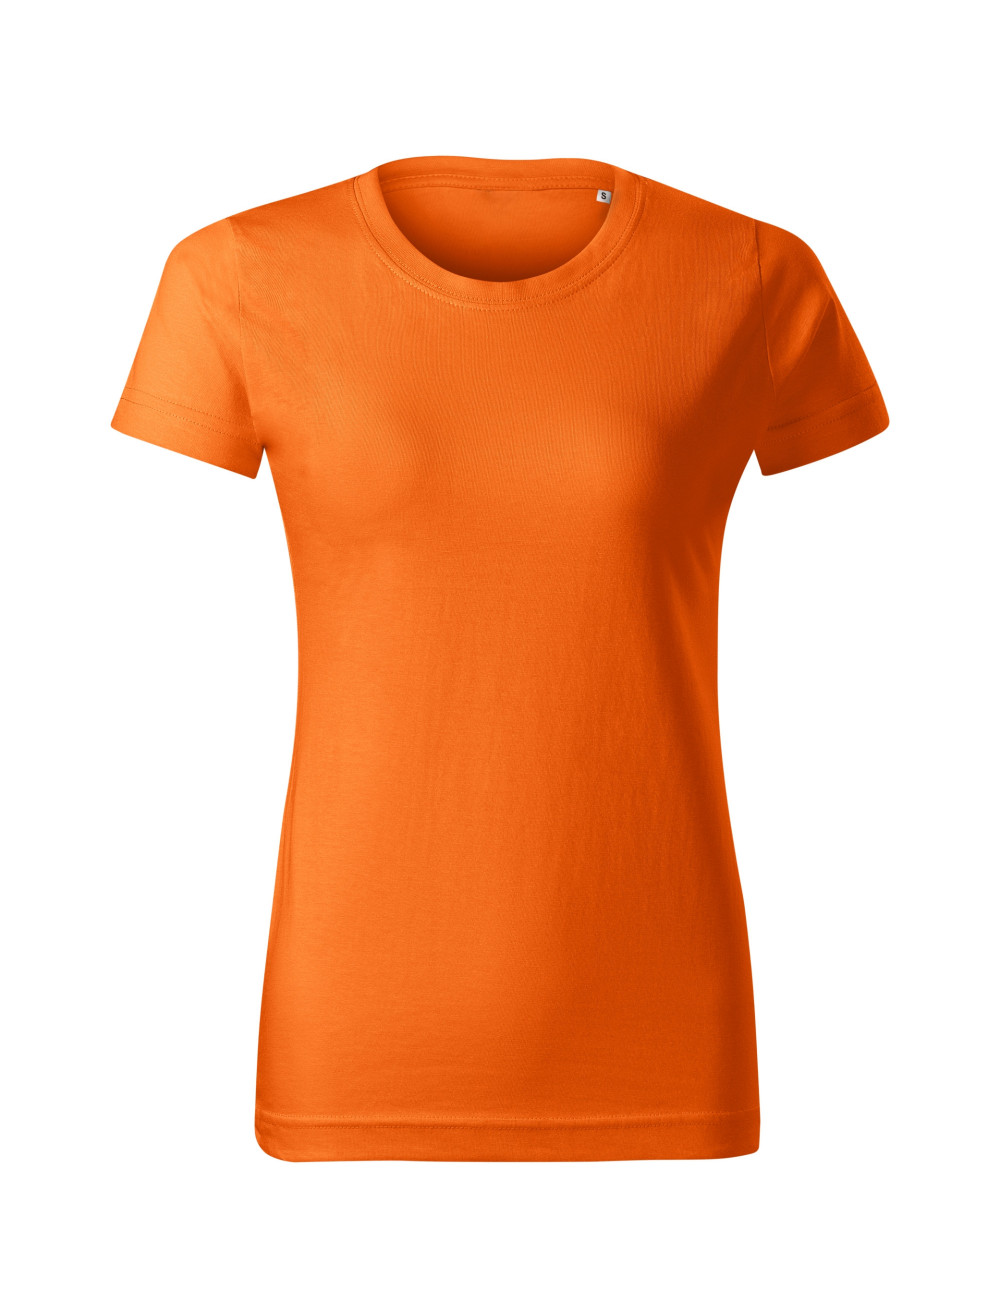 Women`s basic free f34 t-shirt orange Malfini